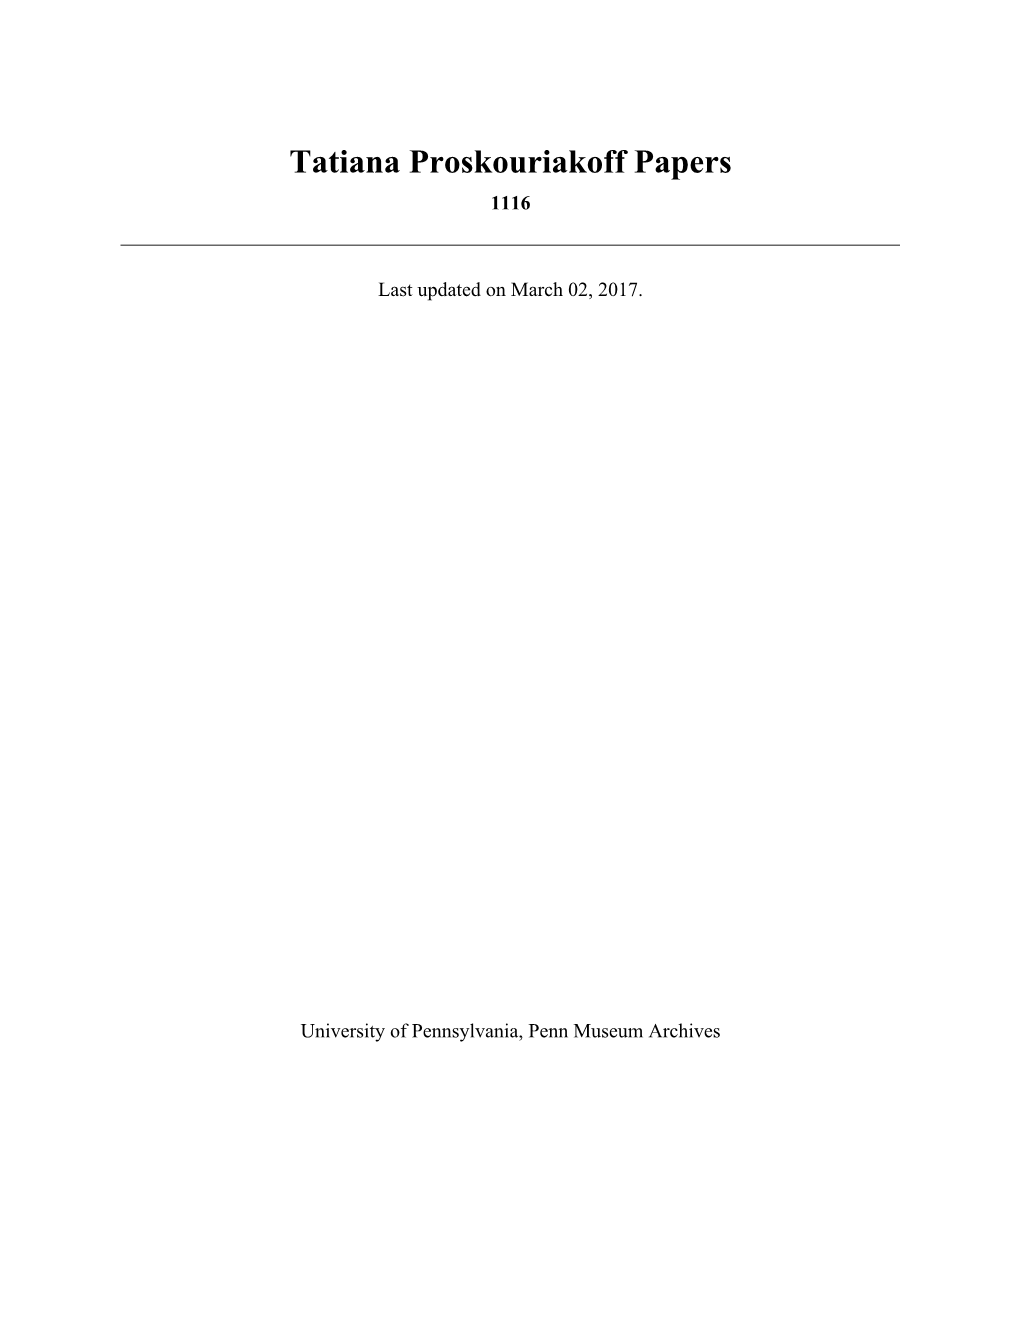 Tatiana Proskouriakoff Papers 1116